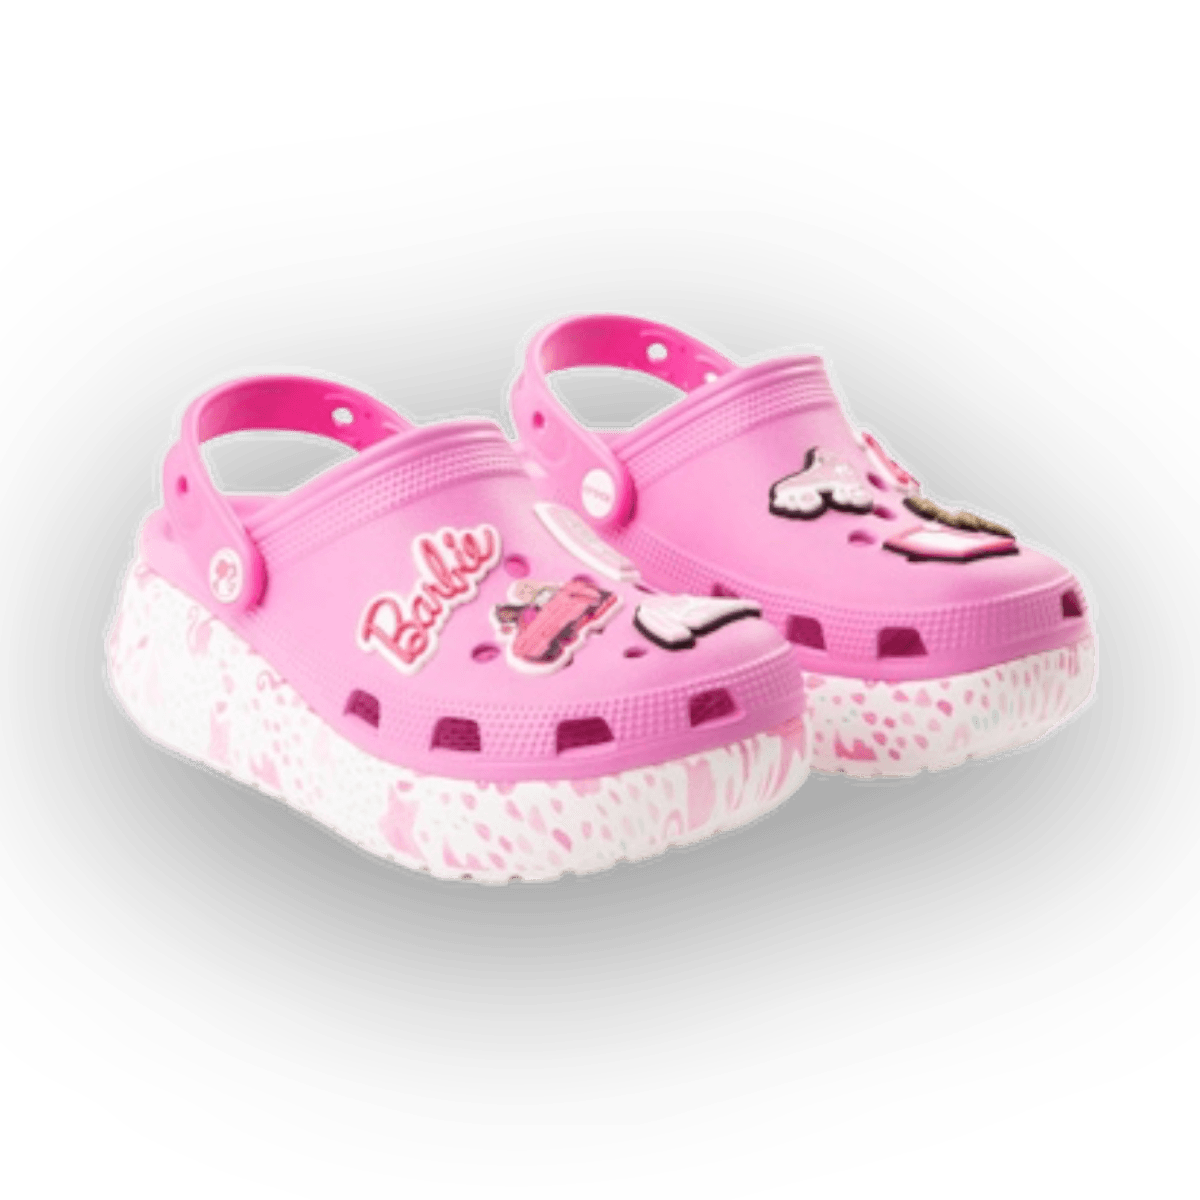 Barbie x Crocs Cutie Clog - Electric Pink - Pre School - Shoes - Jawns on Fire Sneakers & Streetwear